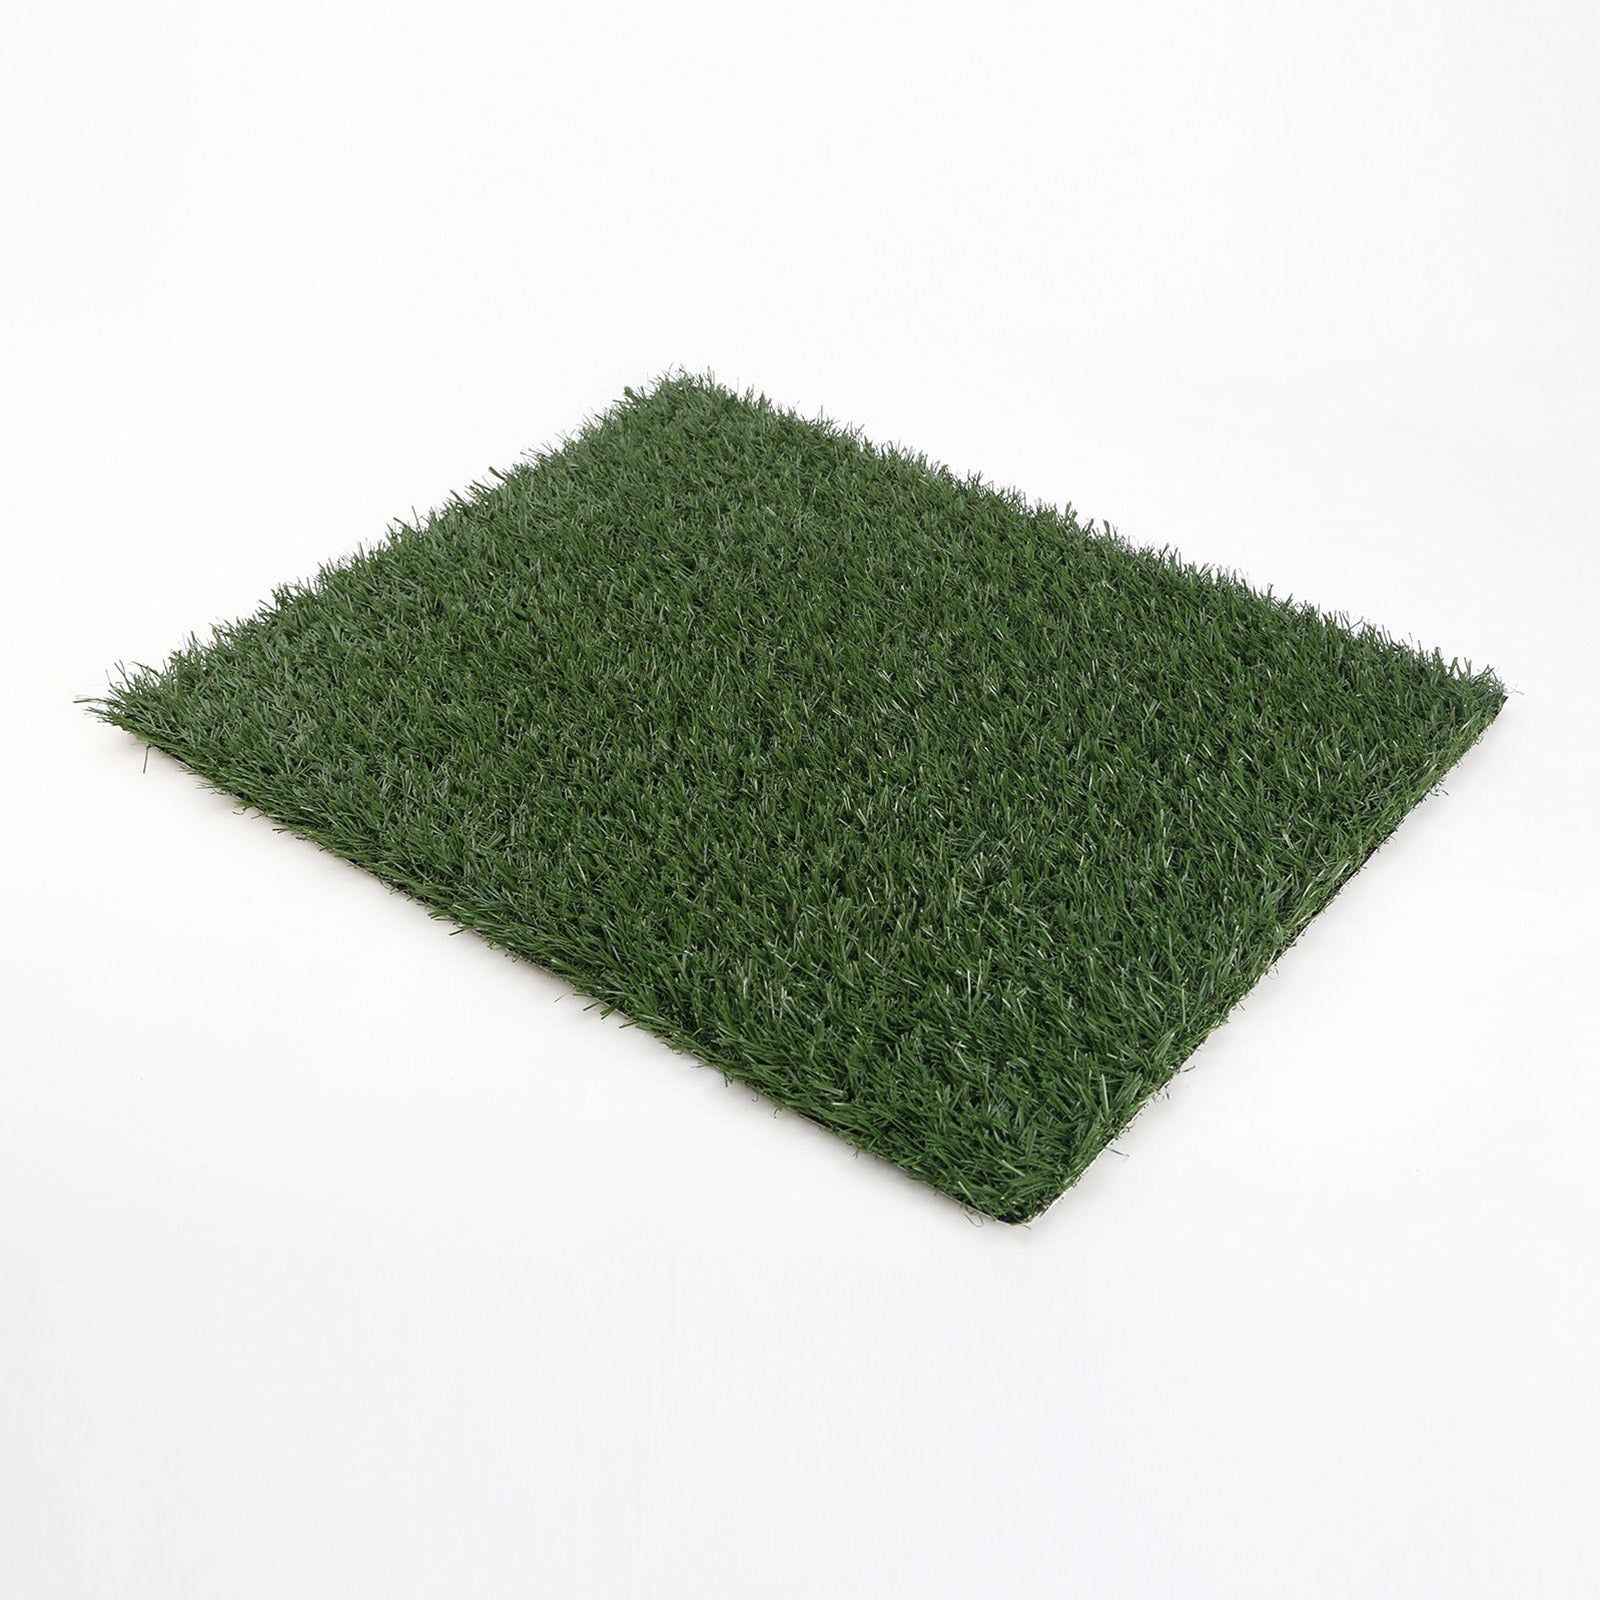 1 Grass Mat for Pet Dog Potty Tray Training Toilet 63.5cm x 38cm - image5